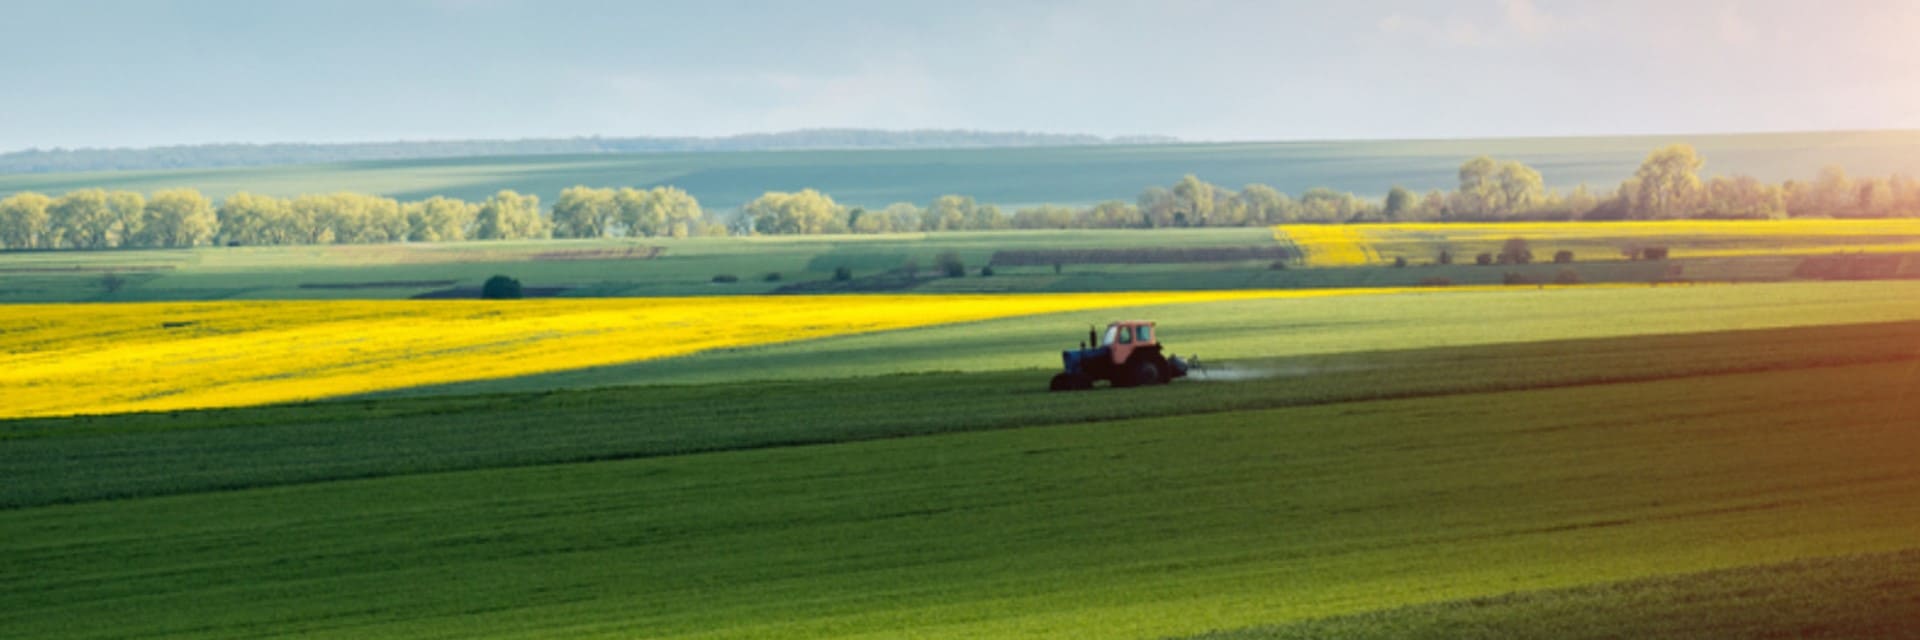 https://chcnav.com/uploads/precision-ag-corn-wheat-soybean-farming-auto-steer-tractor.jpg